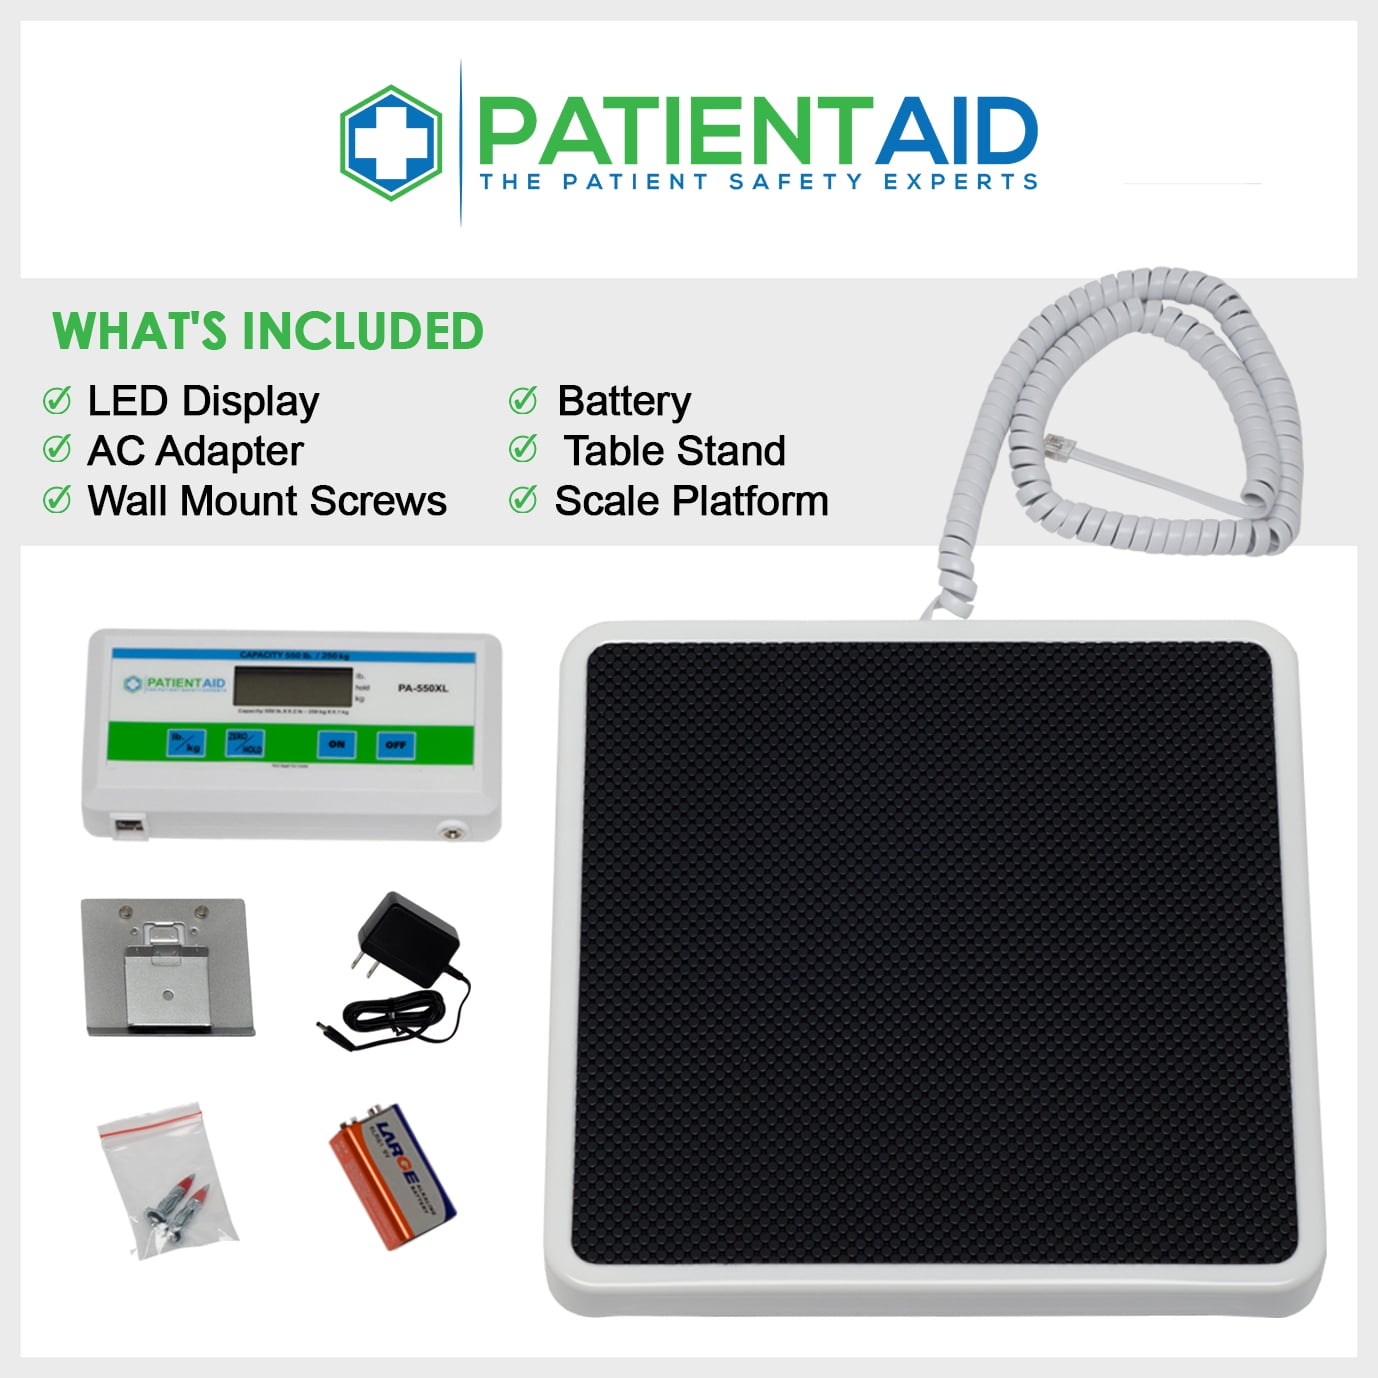  Medical Grade Floor Scale - Portable - Easy to Read Digital  Display - Heavy Duty - Home, Hospital & Physician Use - Pound & Kilogram  Settings - 12 x 12.5 Platform 